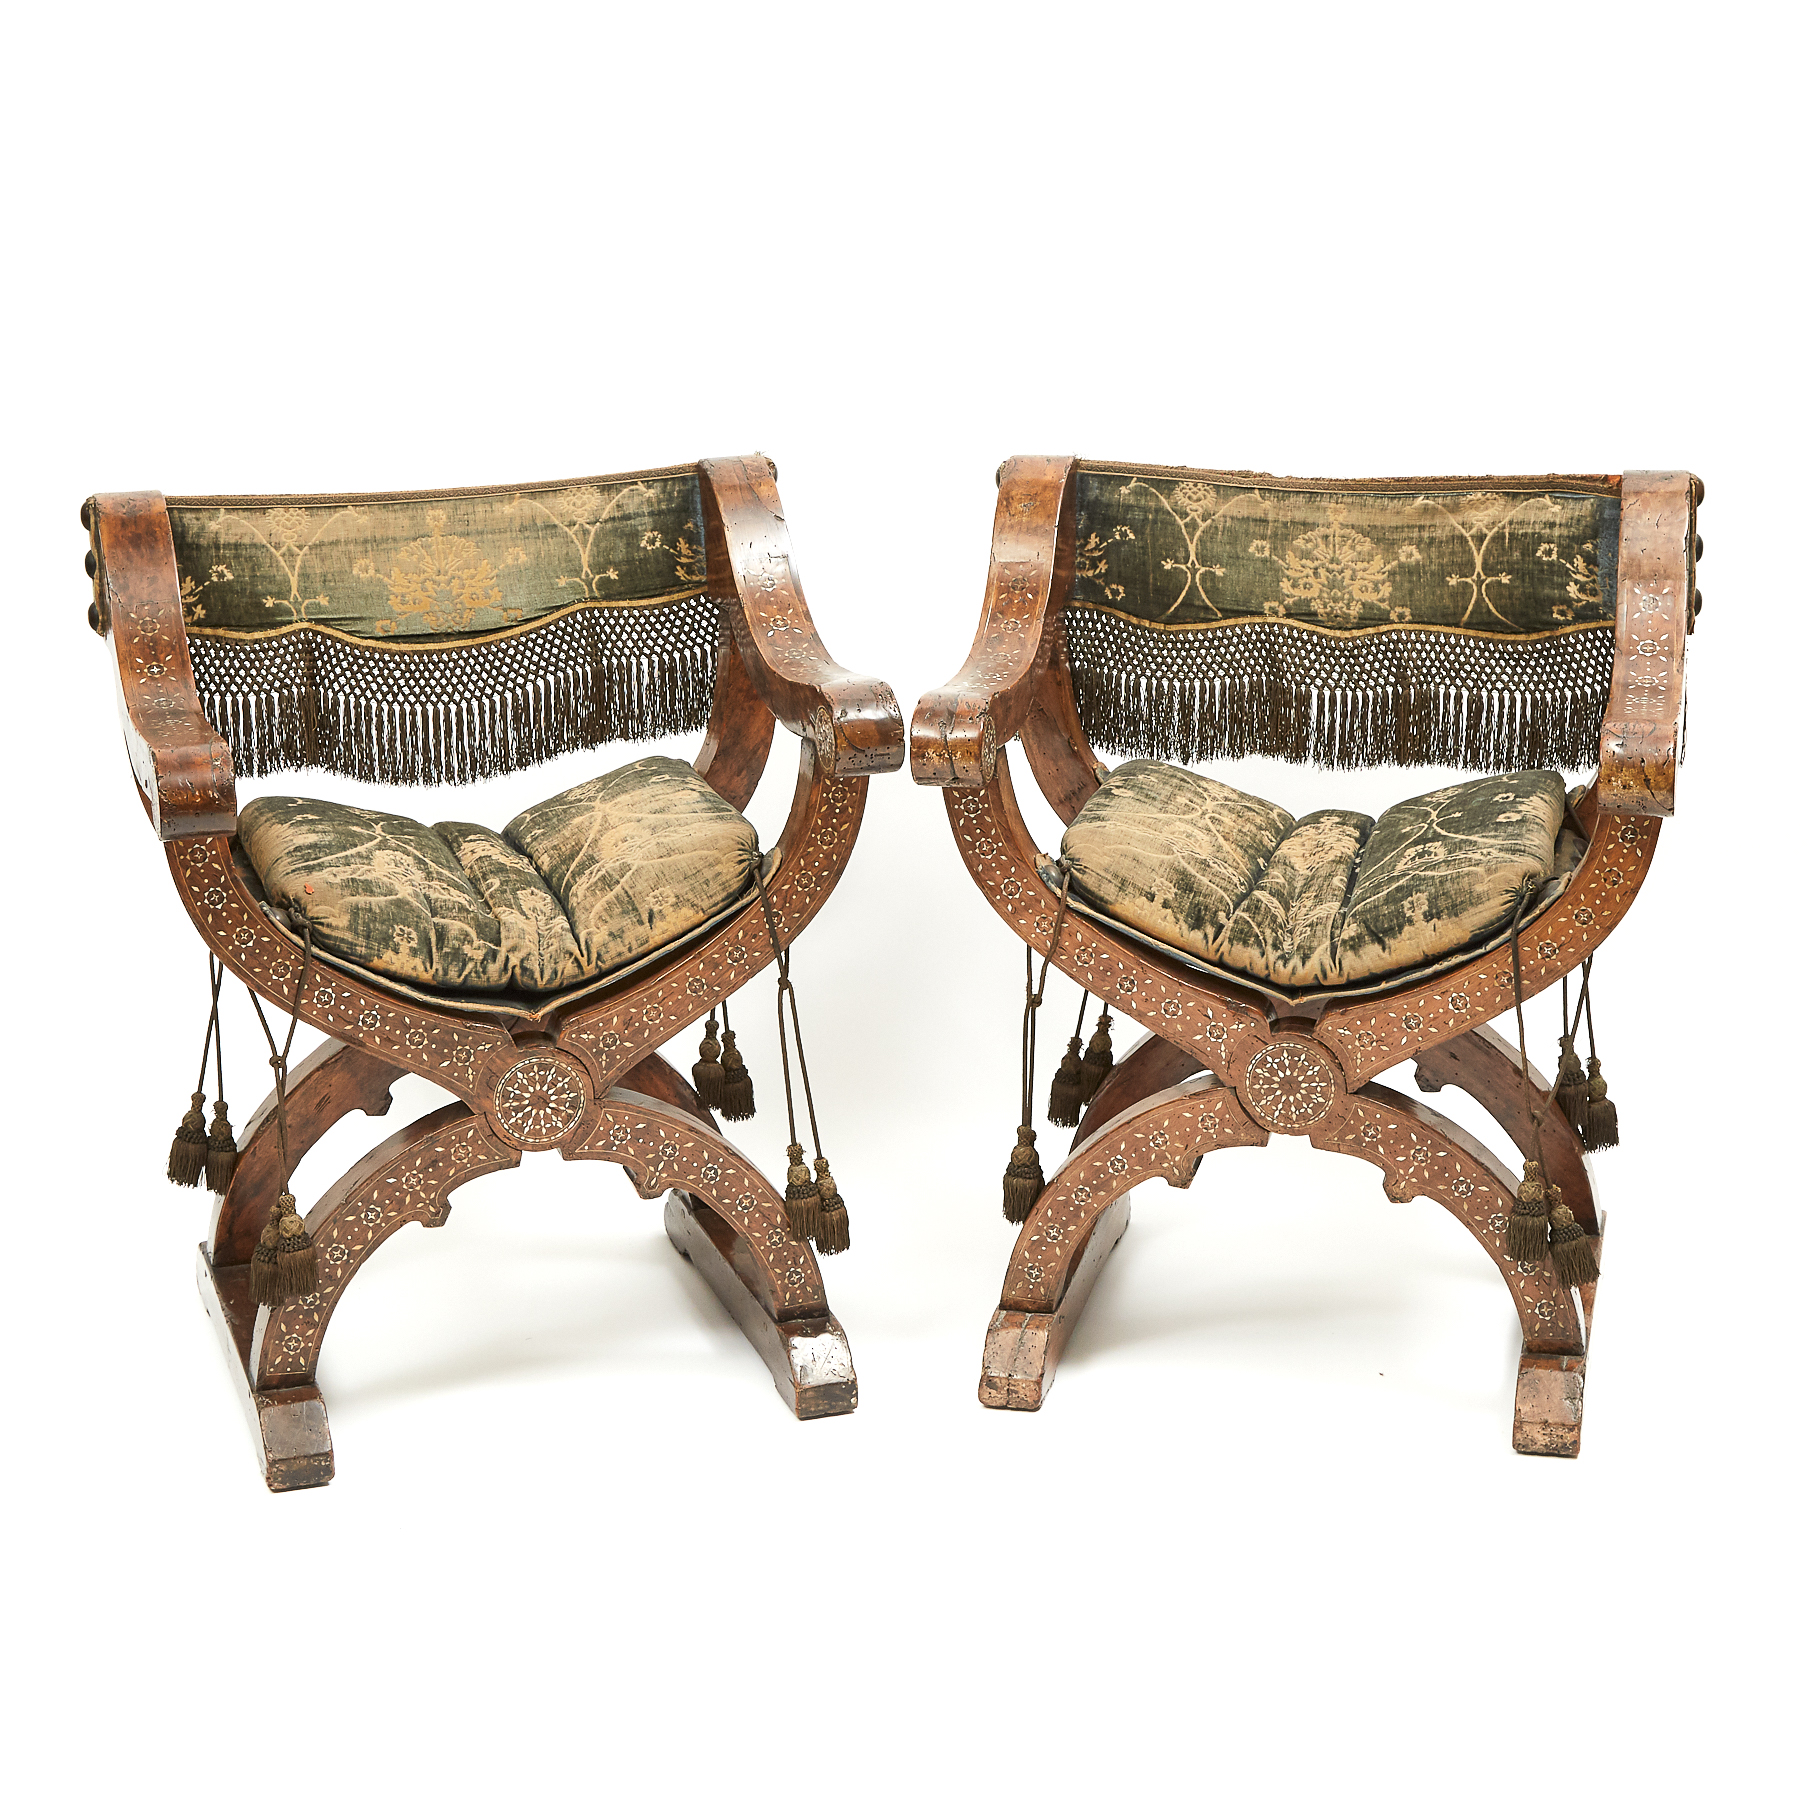 Pair of Italian Bone Inlaid Walnut Savonarola Chairs, 18th century